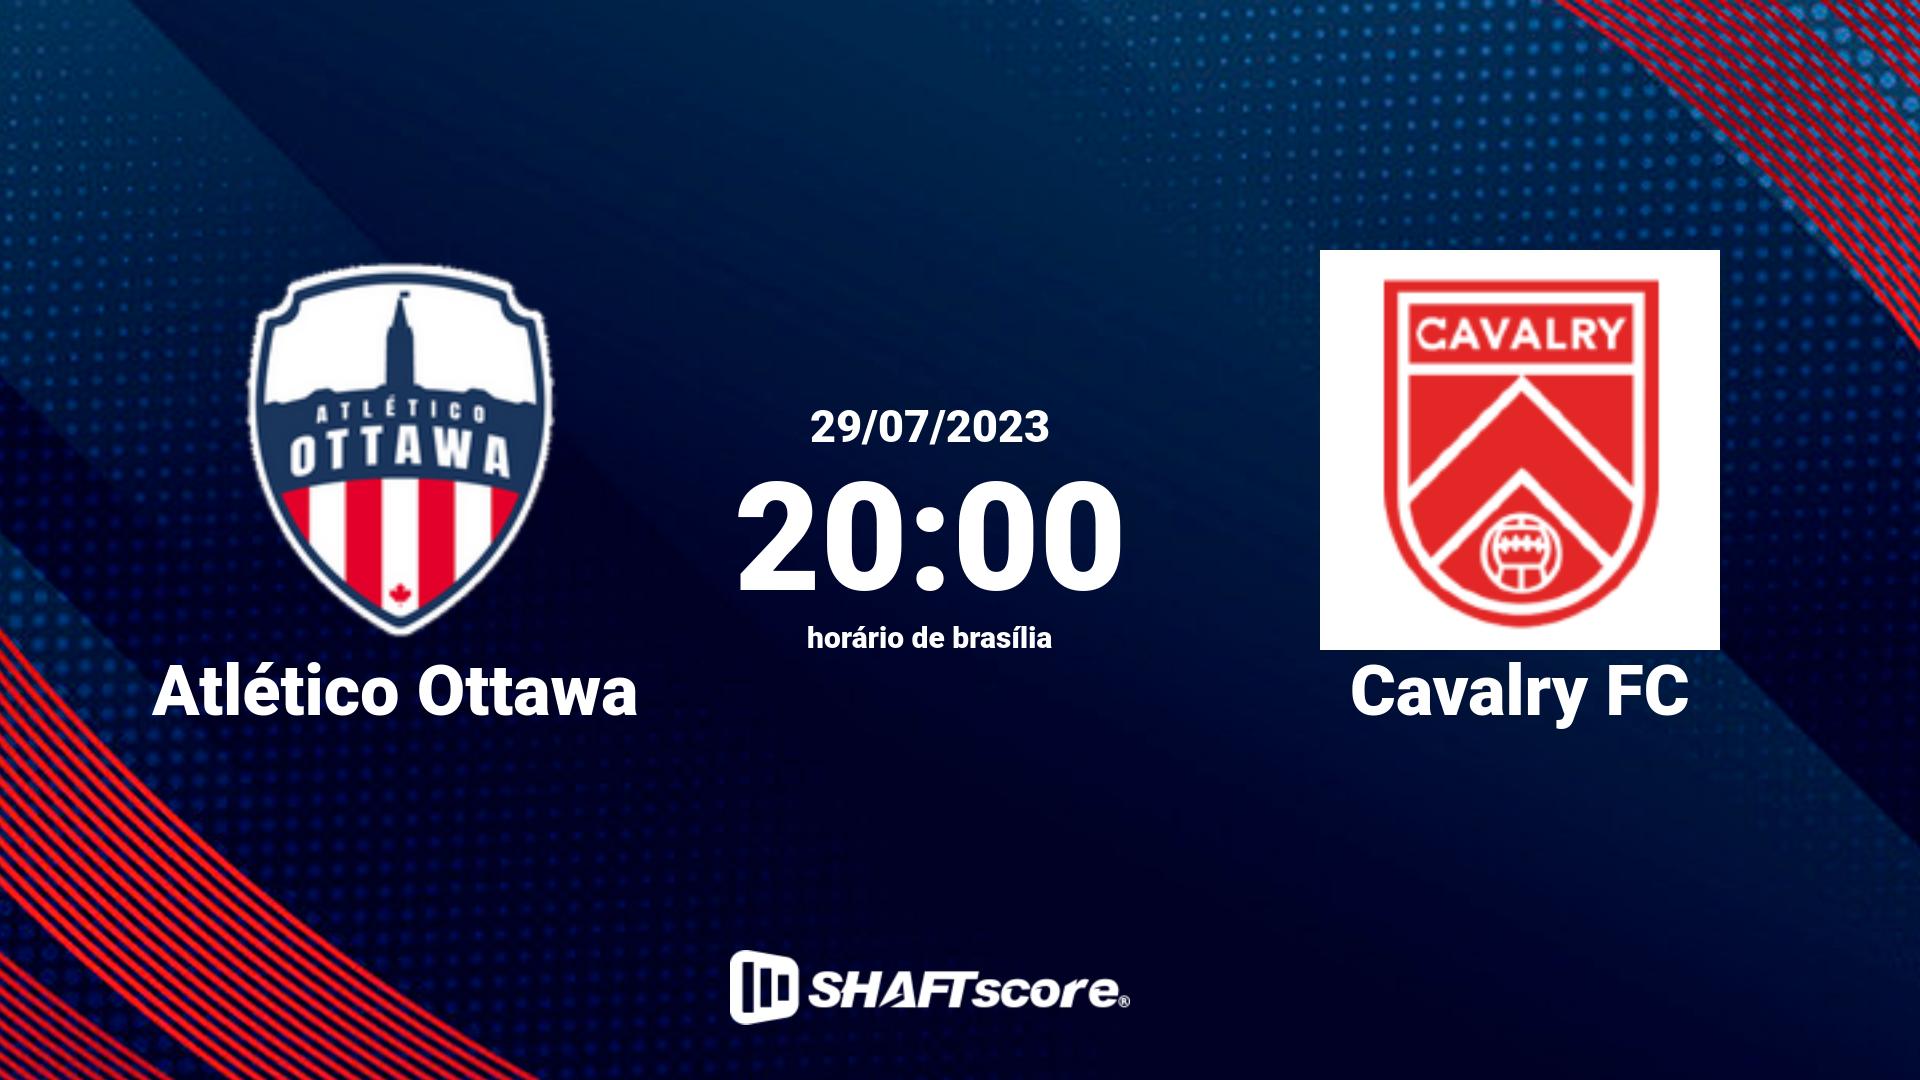 Estatísticas do jogo Atlético Ottawa vs Cavalry FC 29.07 20:00